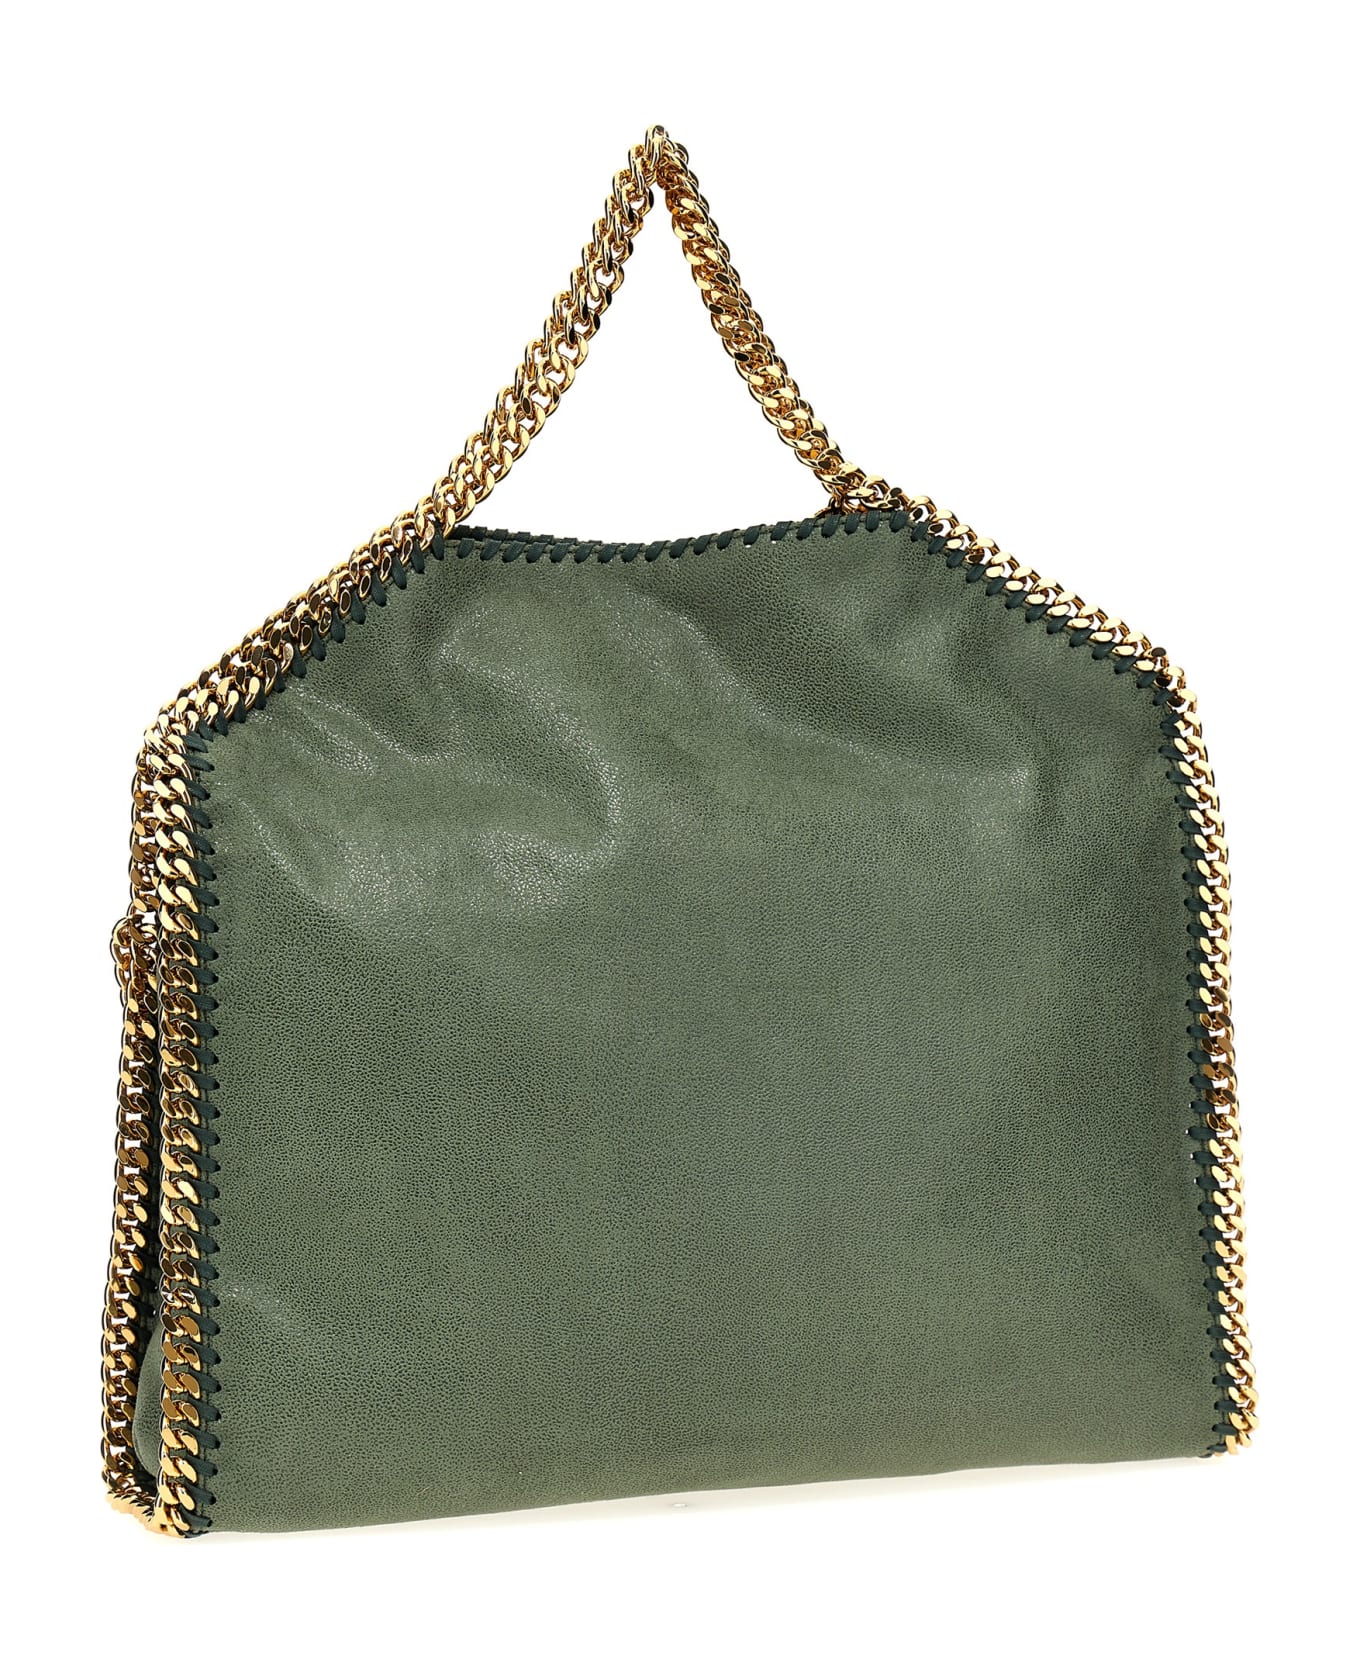 Stella McCartney Falabella 3 Chain Handbag - Stone Green